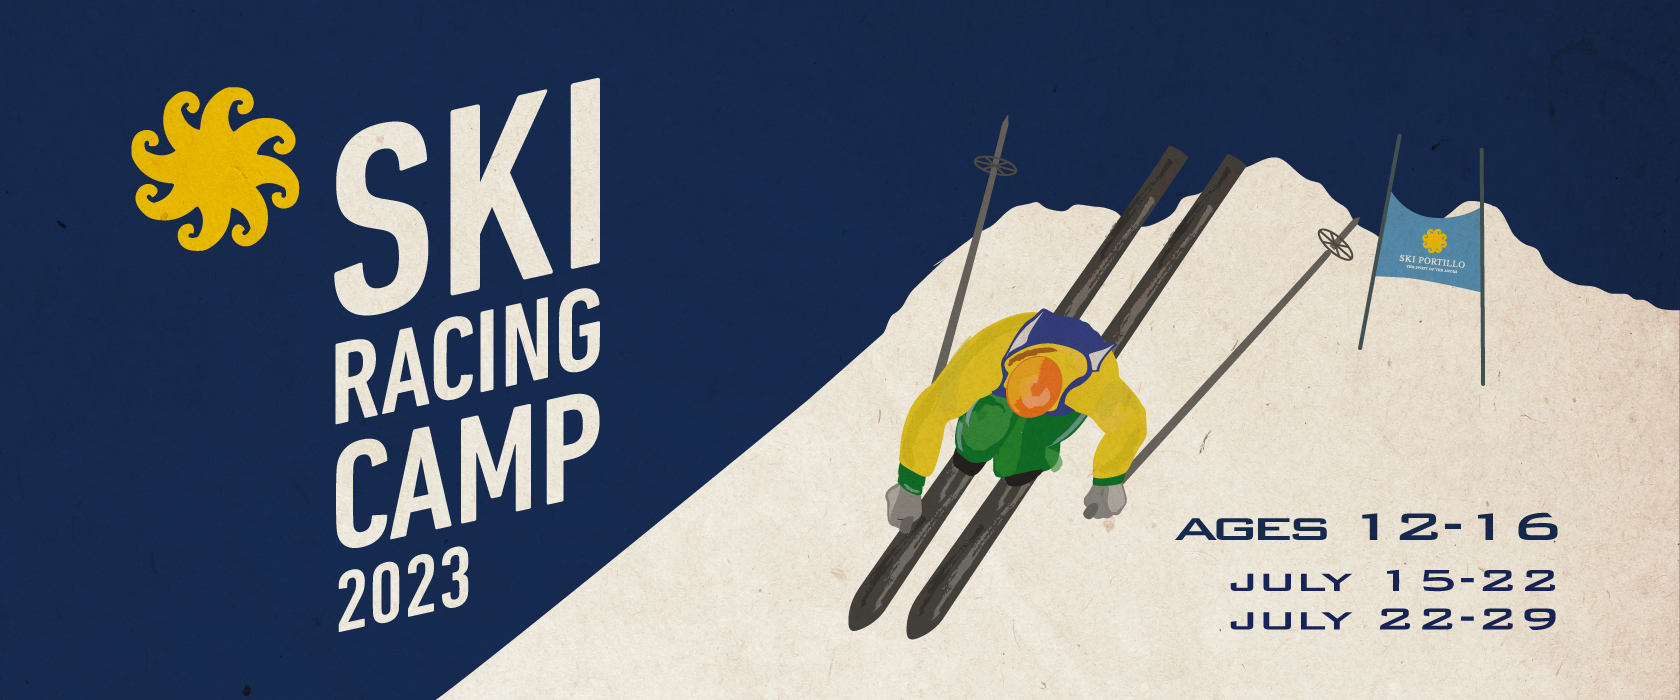 Ski Racing Camp 2023